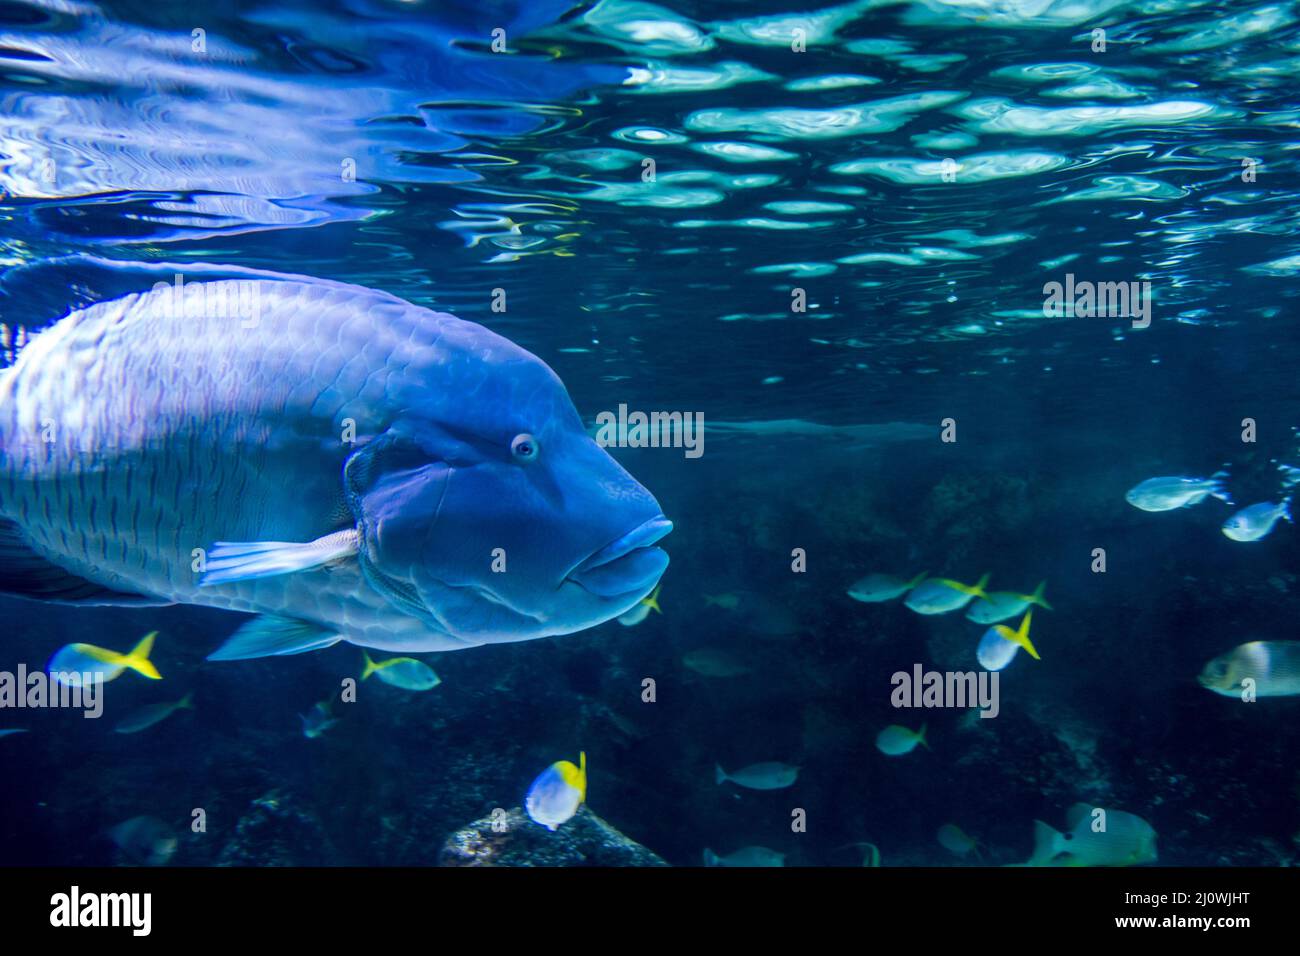 Humphead wrasse fish swimming in ocean Stock Photo